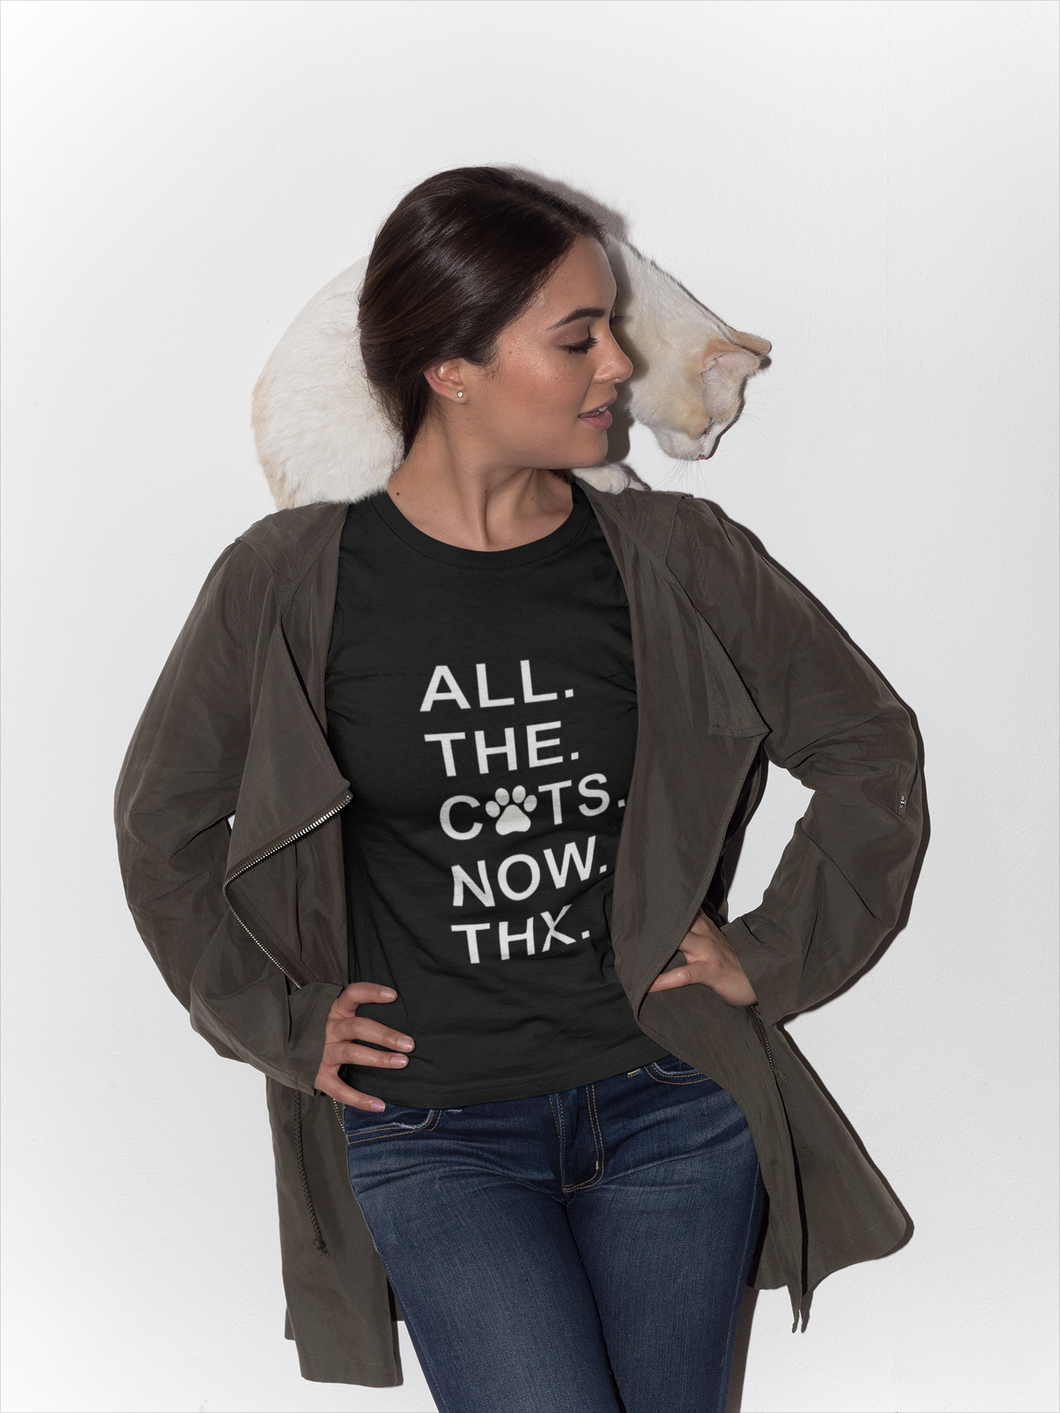 All the Cats. Now. - Men's/Unisex T-shirt or Women's T-shirt